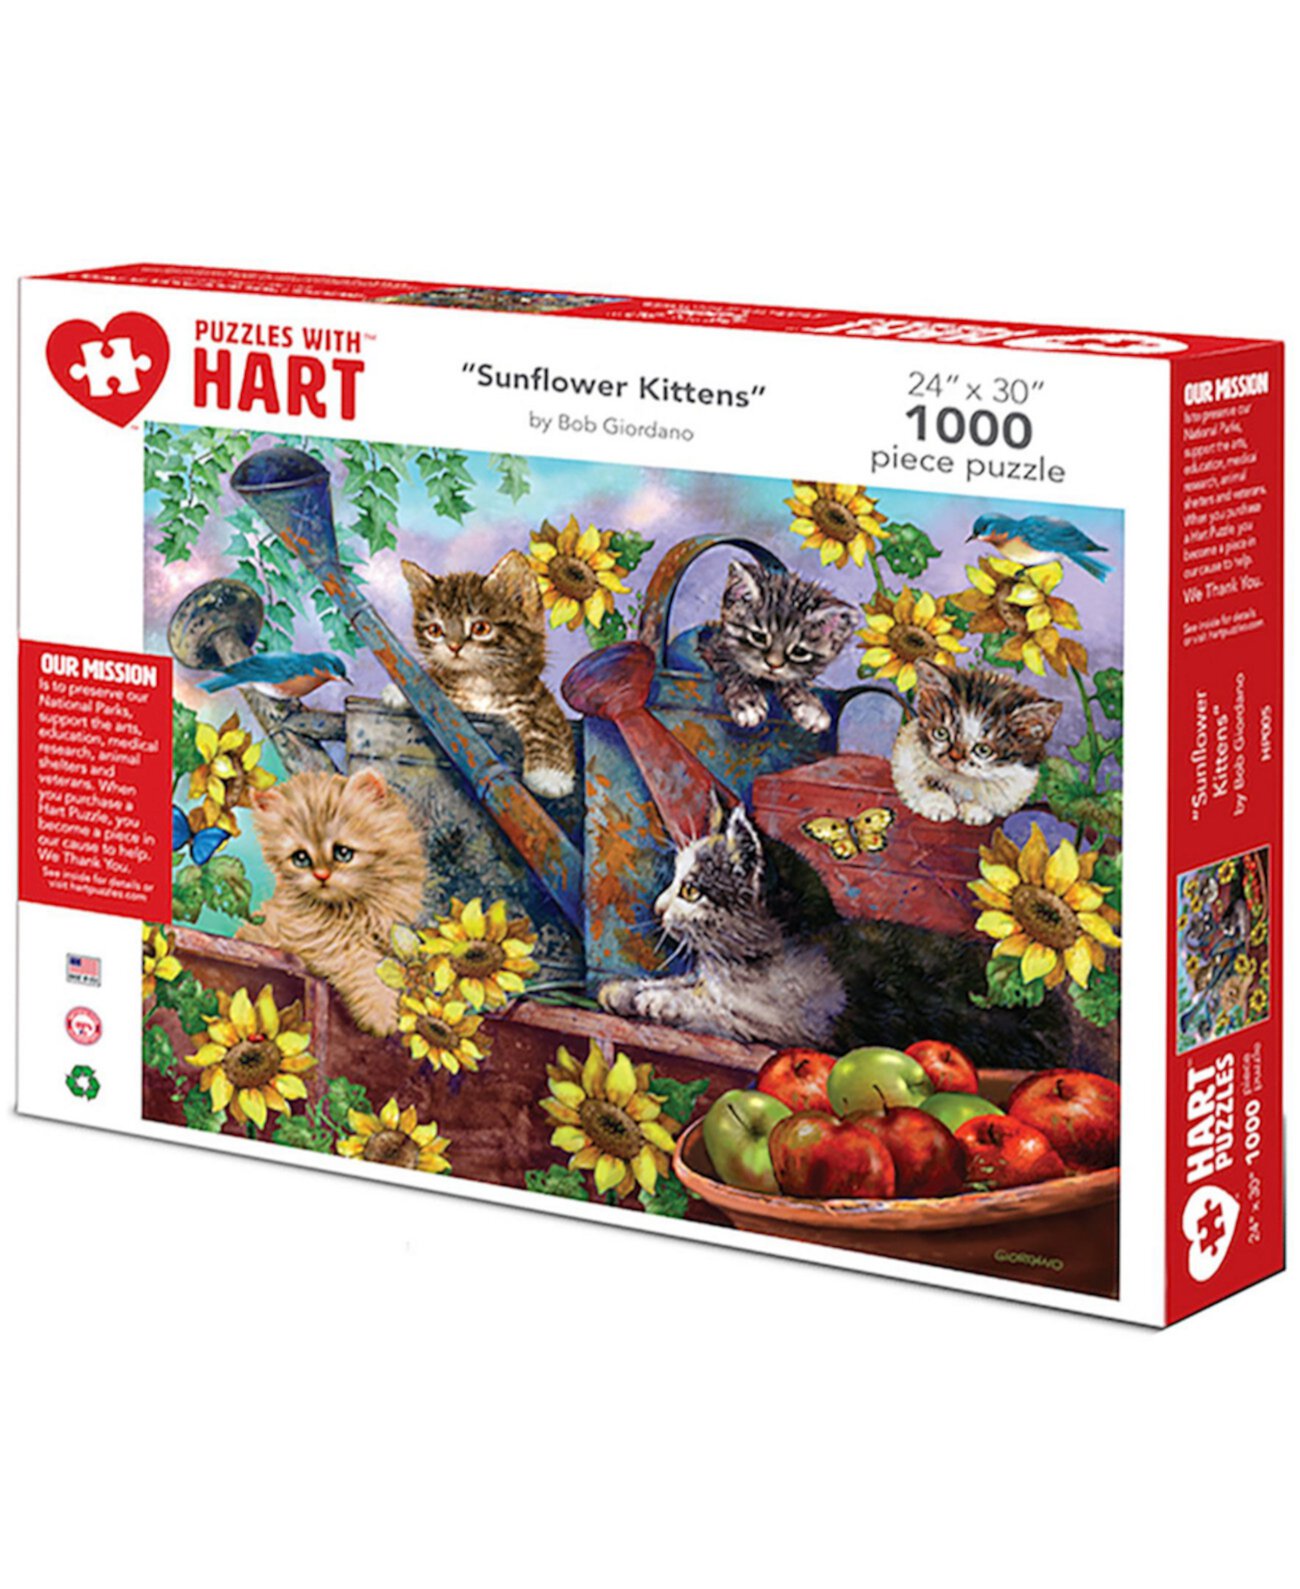 Набор Sunflower Kittens 24 x 30 дюймов от Bob Giordano, 1000 штук Hart Puzzles